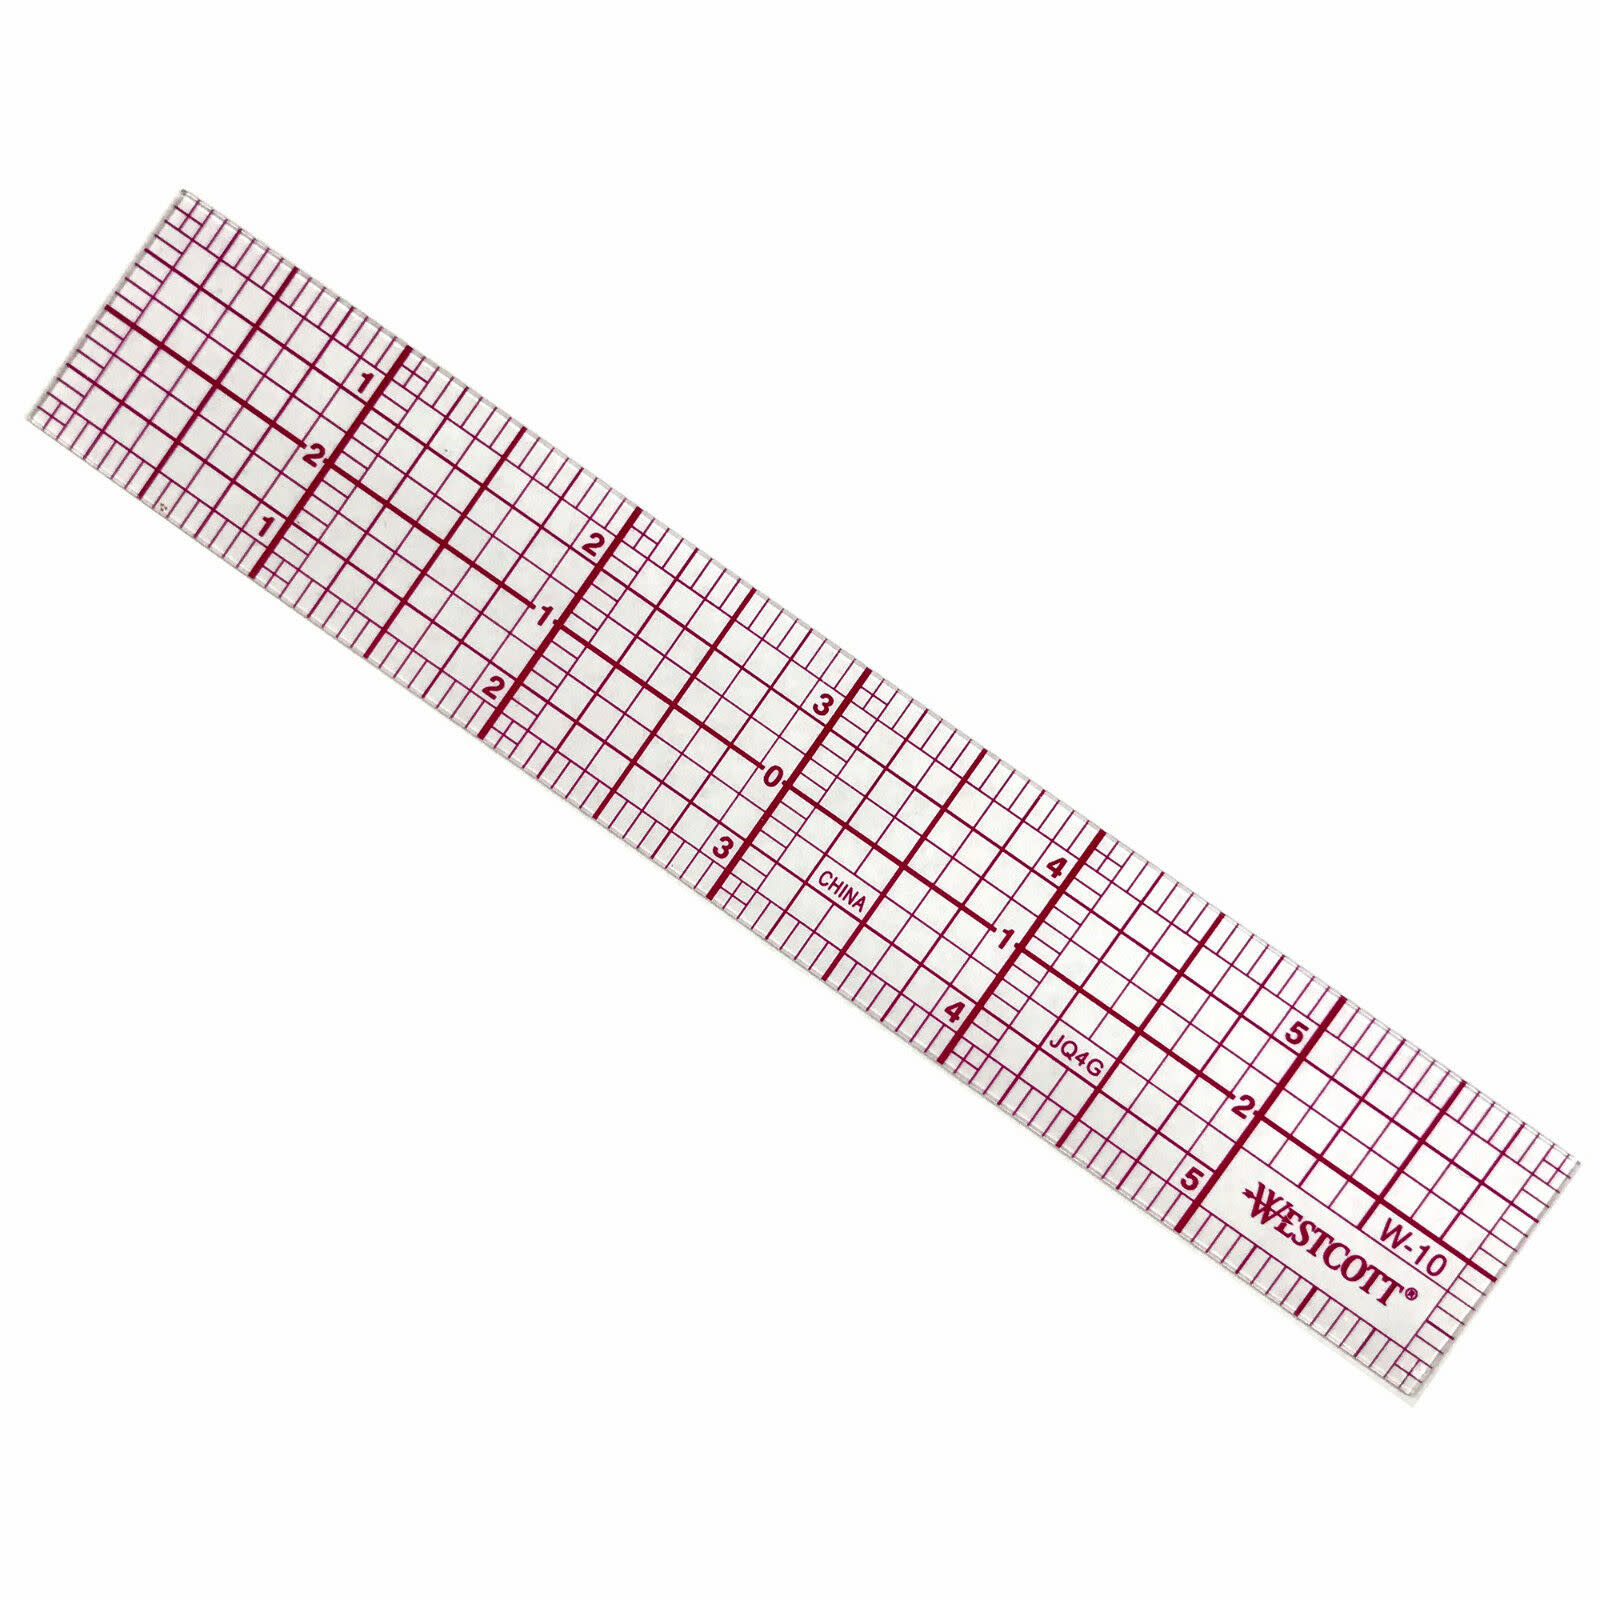 Westcott Grid Ruler - 12, Clear Plastic